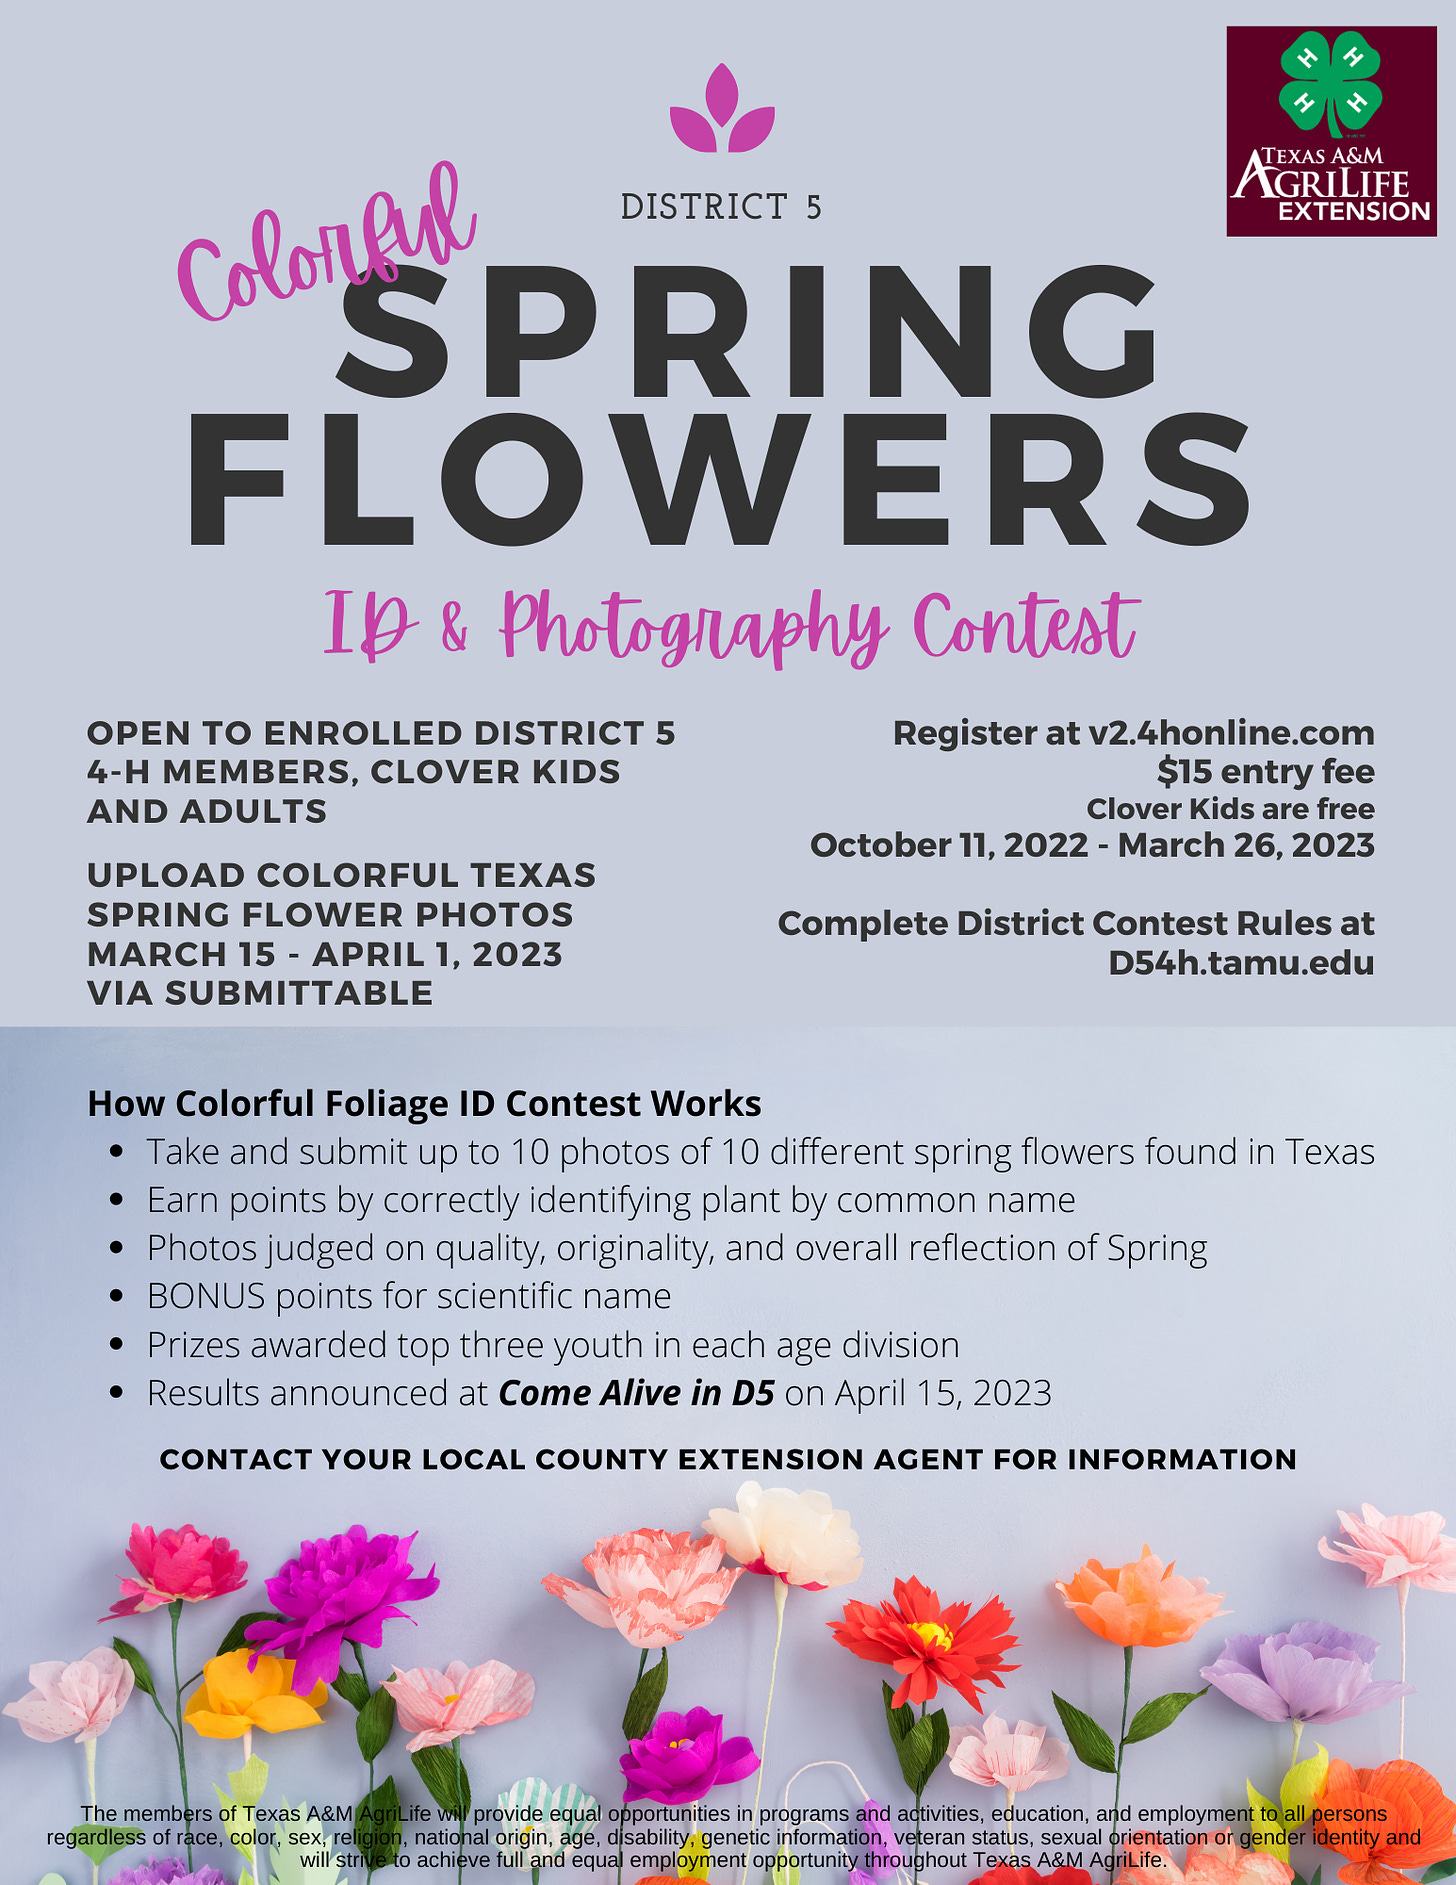 https://d54-h.tamu.edu/files/2022/10/2023-Horticulture-Spring-Flowers-Flyer3.png